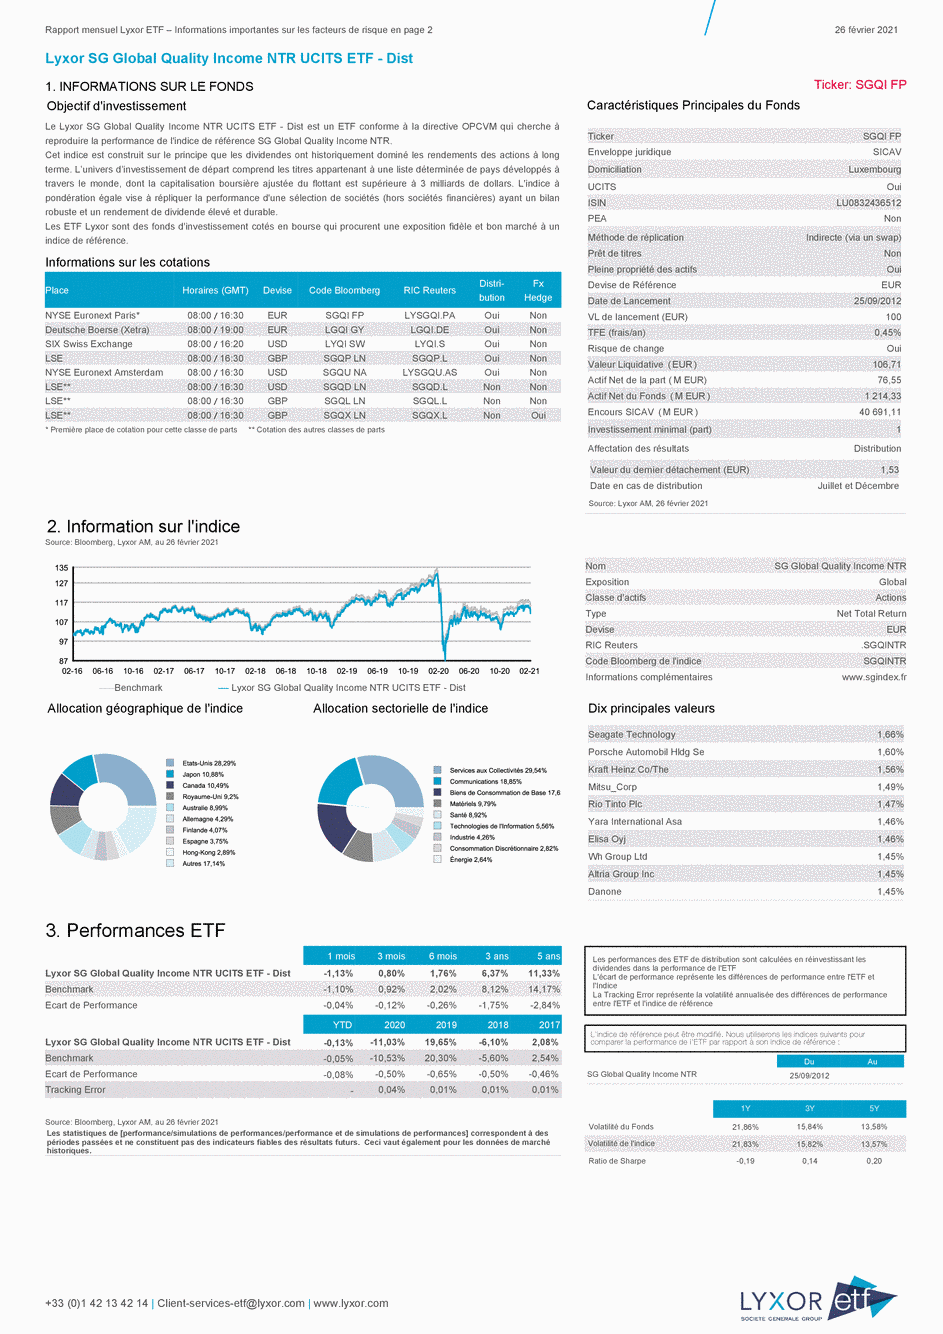 Reporting Lyxor SG Global Quality Income NTR UCITS ETF - Dist - 26/02/2021 - Français